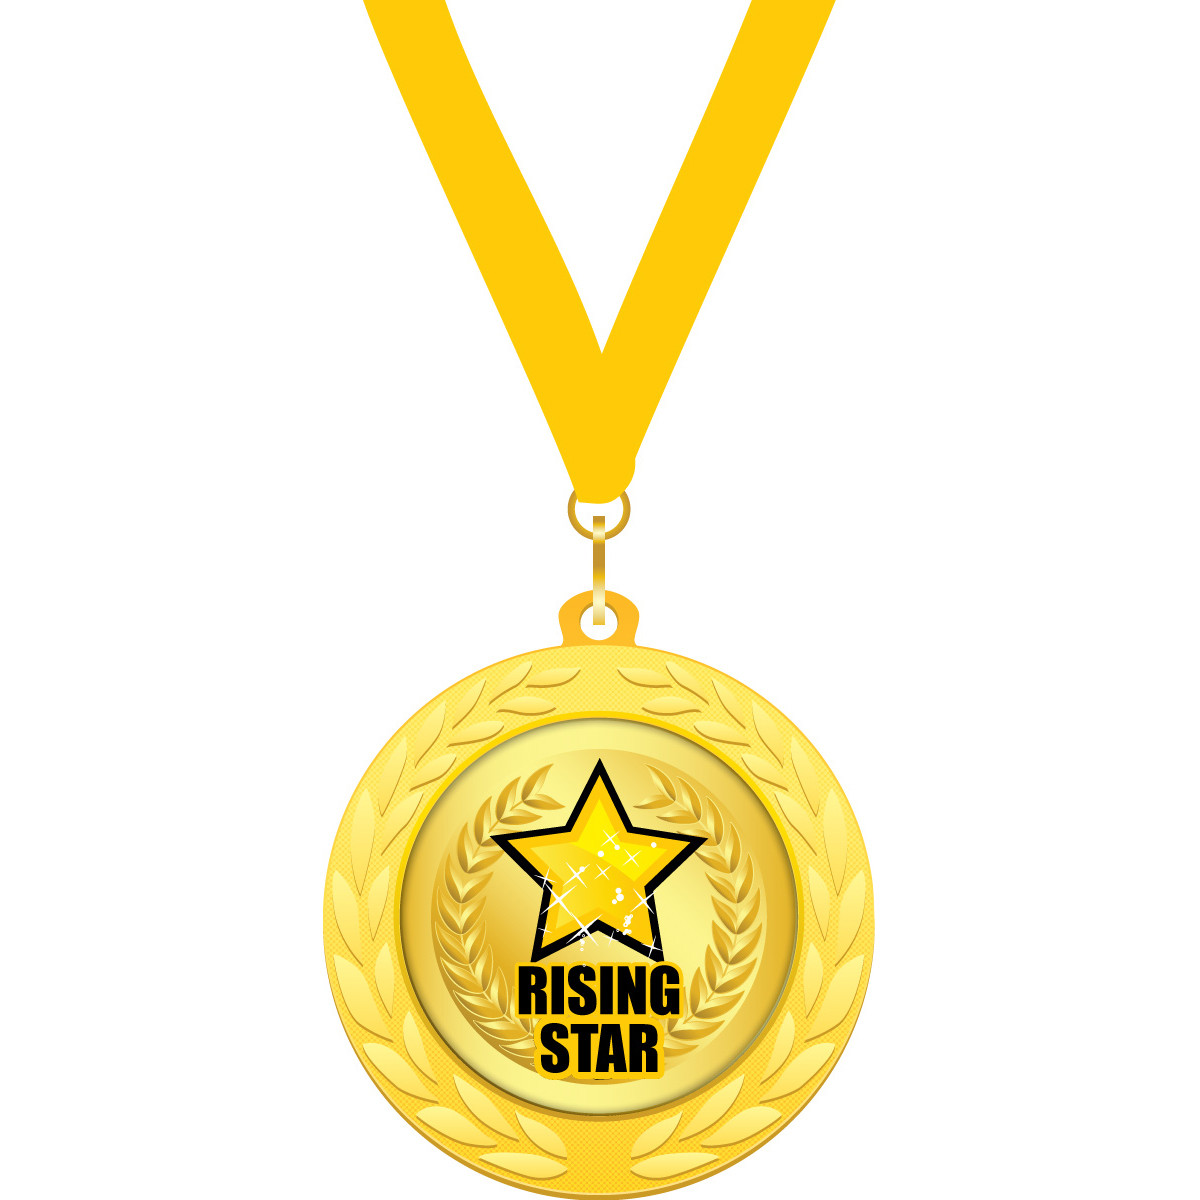 Custom 2 in. Gold Medallion with Golden-Yellow Neck Ribbon (Rising Star)